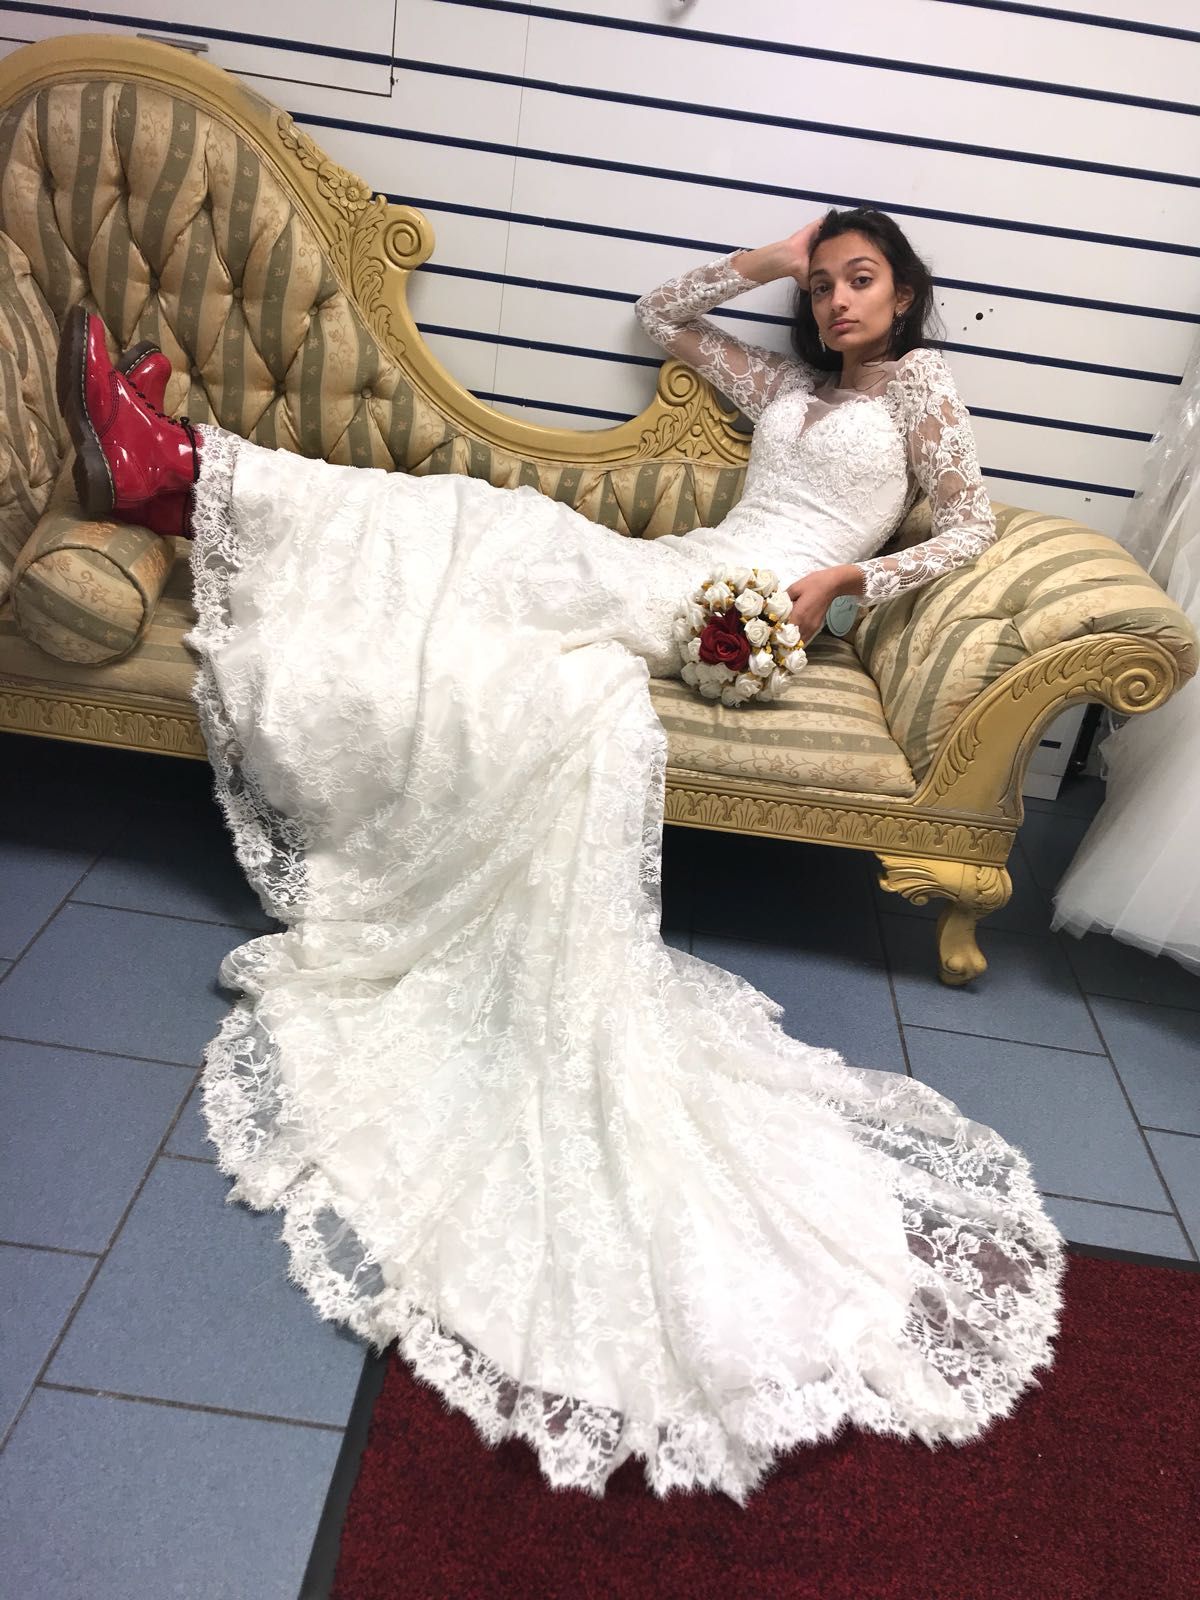 Best Dress 2 Impress Bridal-Image-104